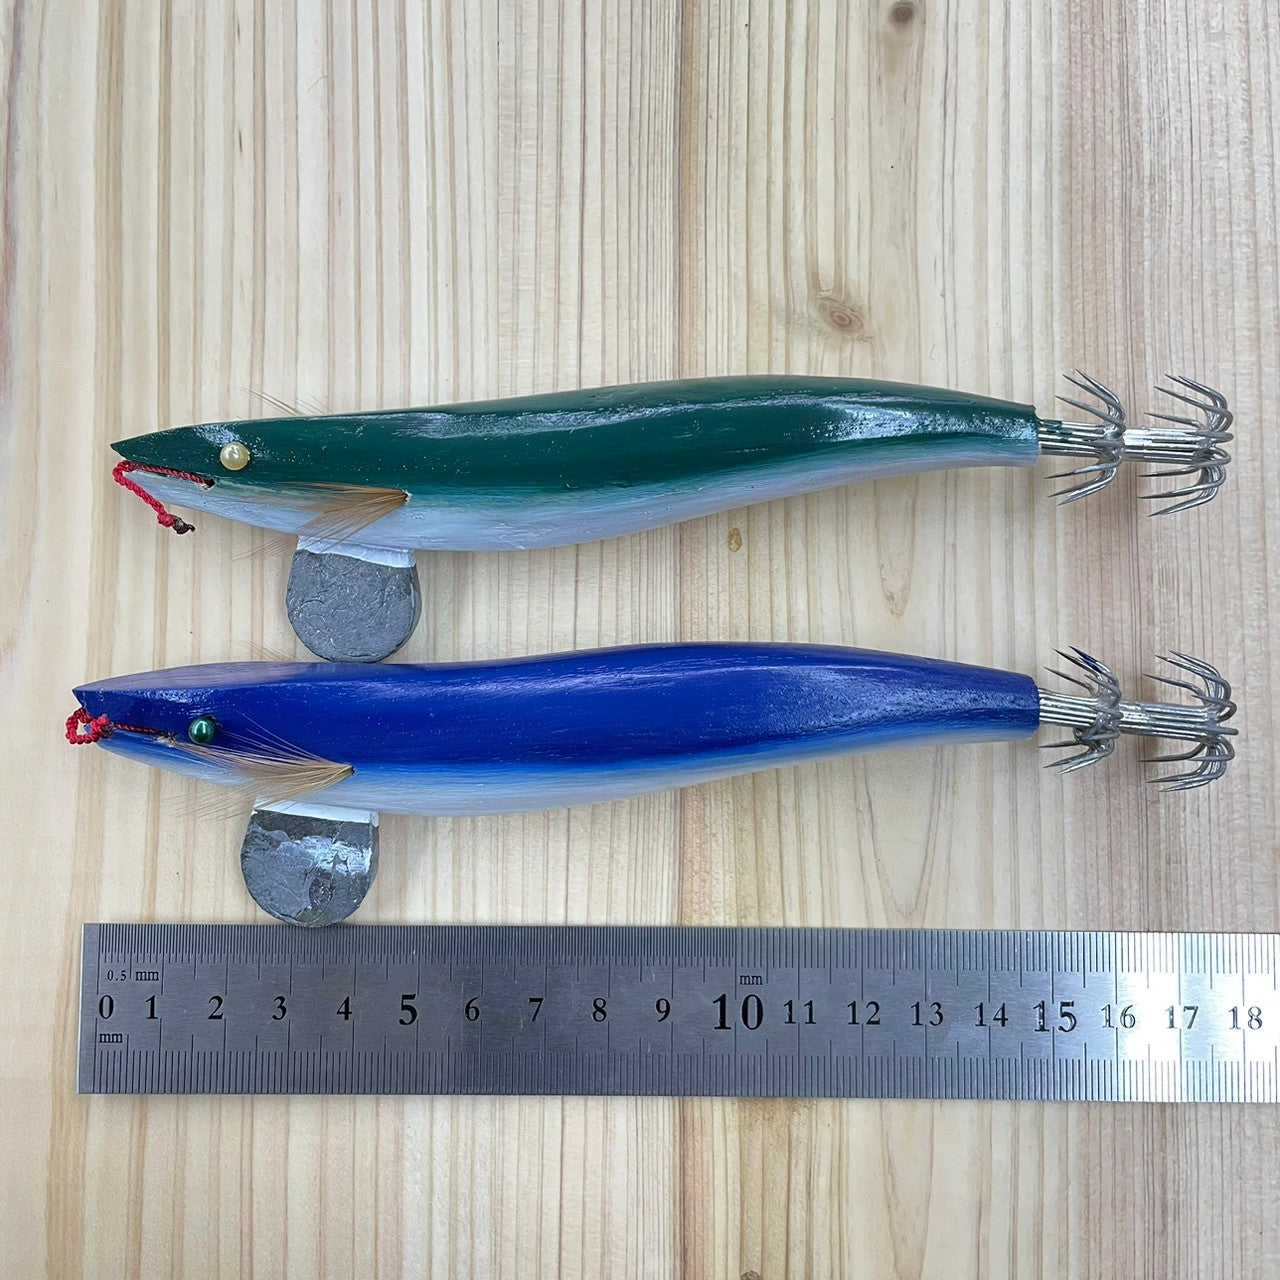 ■ (Shipping fee: 370 yen) Hand-made tow-shaped egi, very popular with fishermen